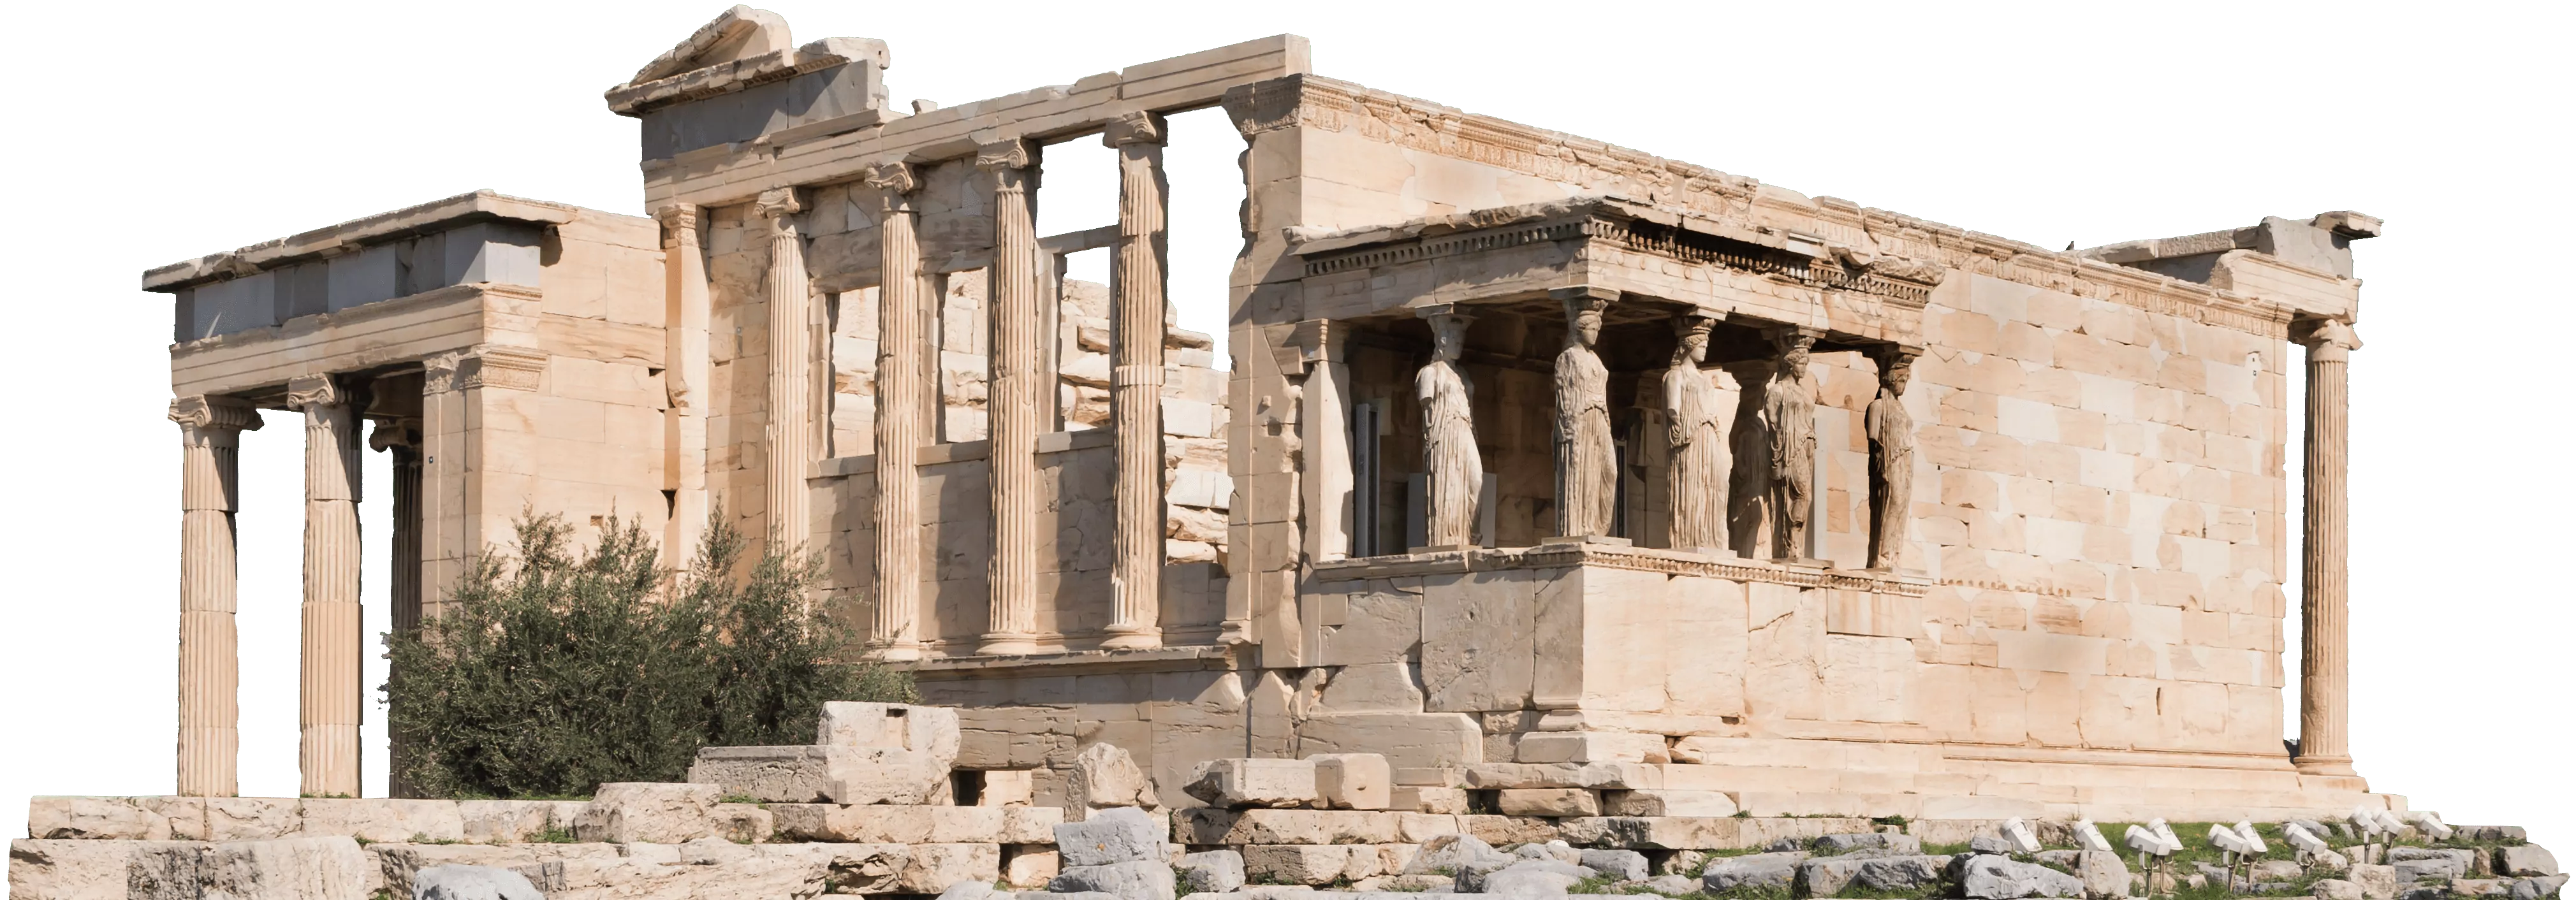 Erechtheion, Ancient Greece